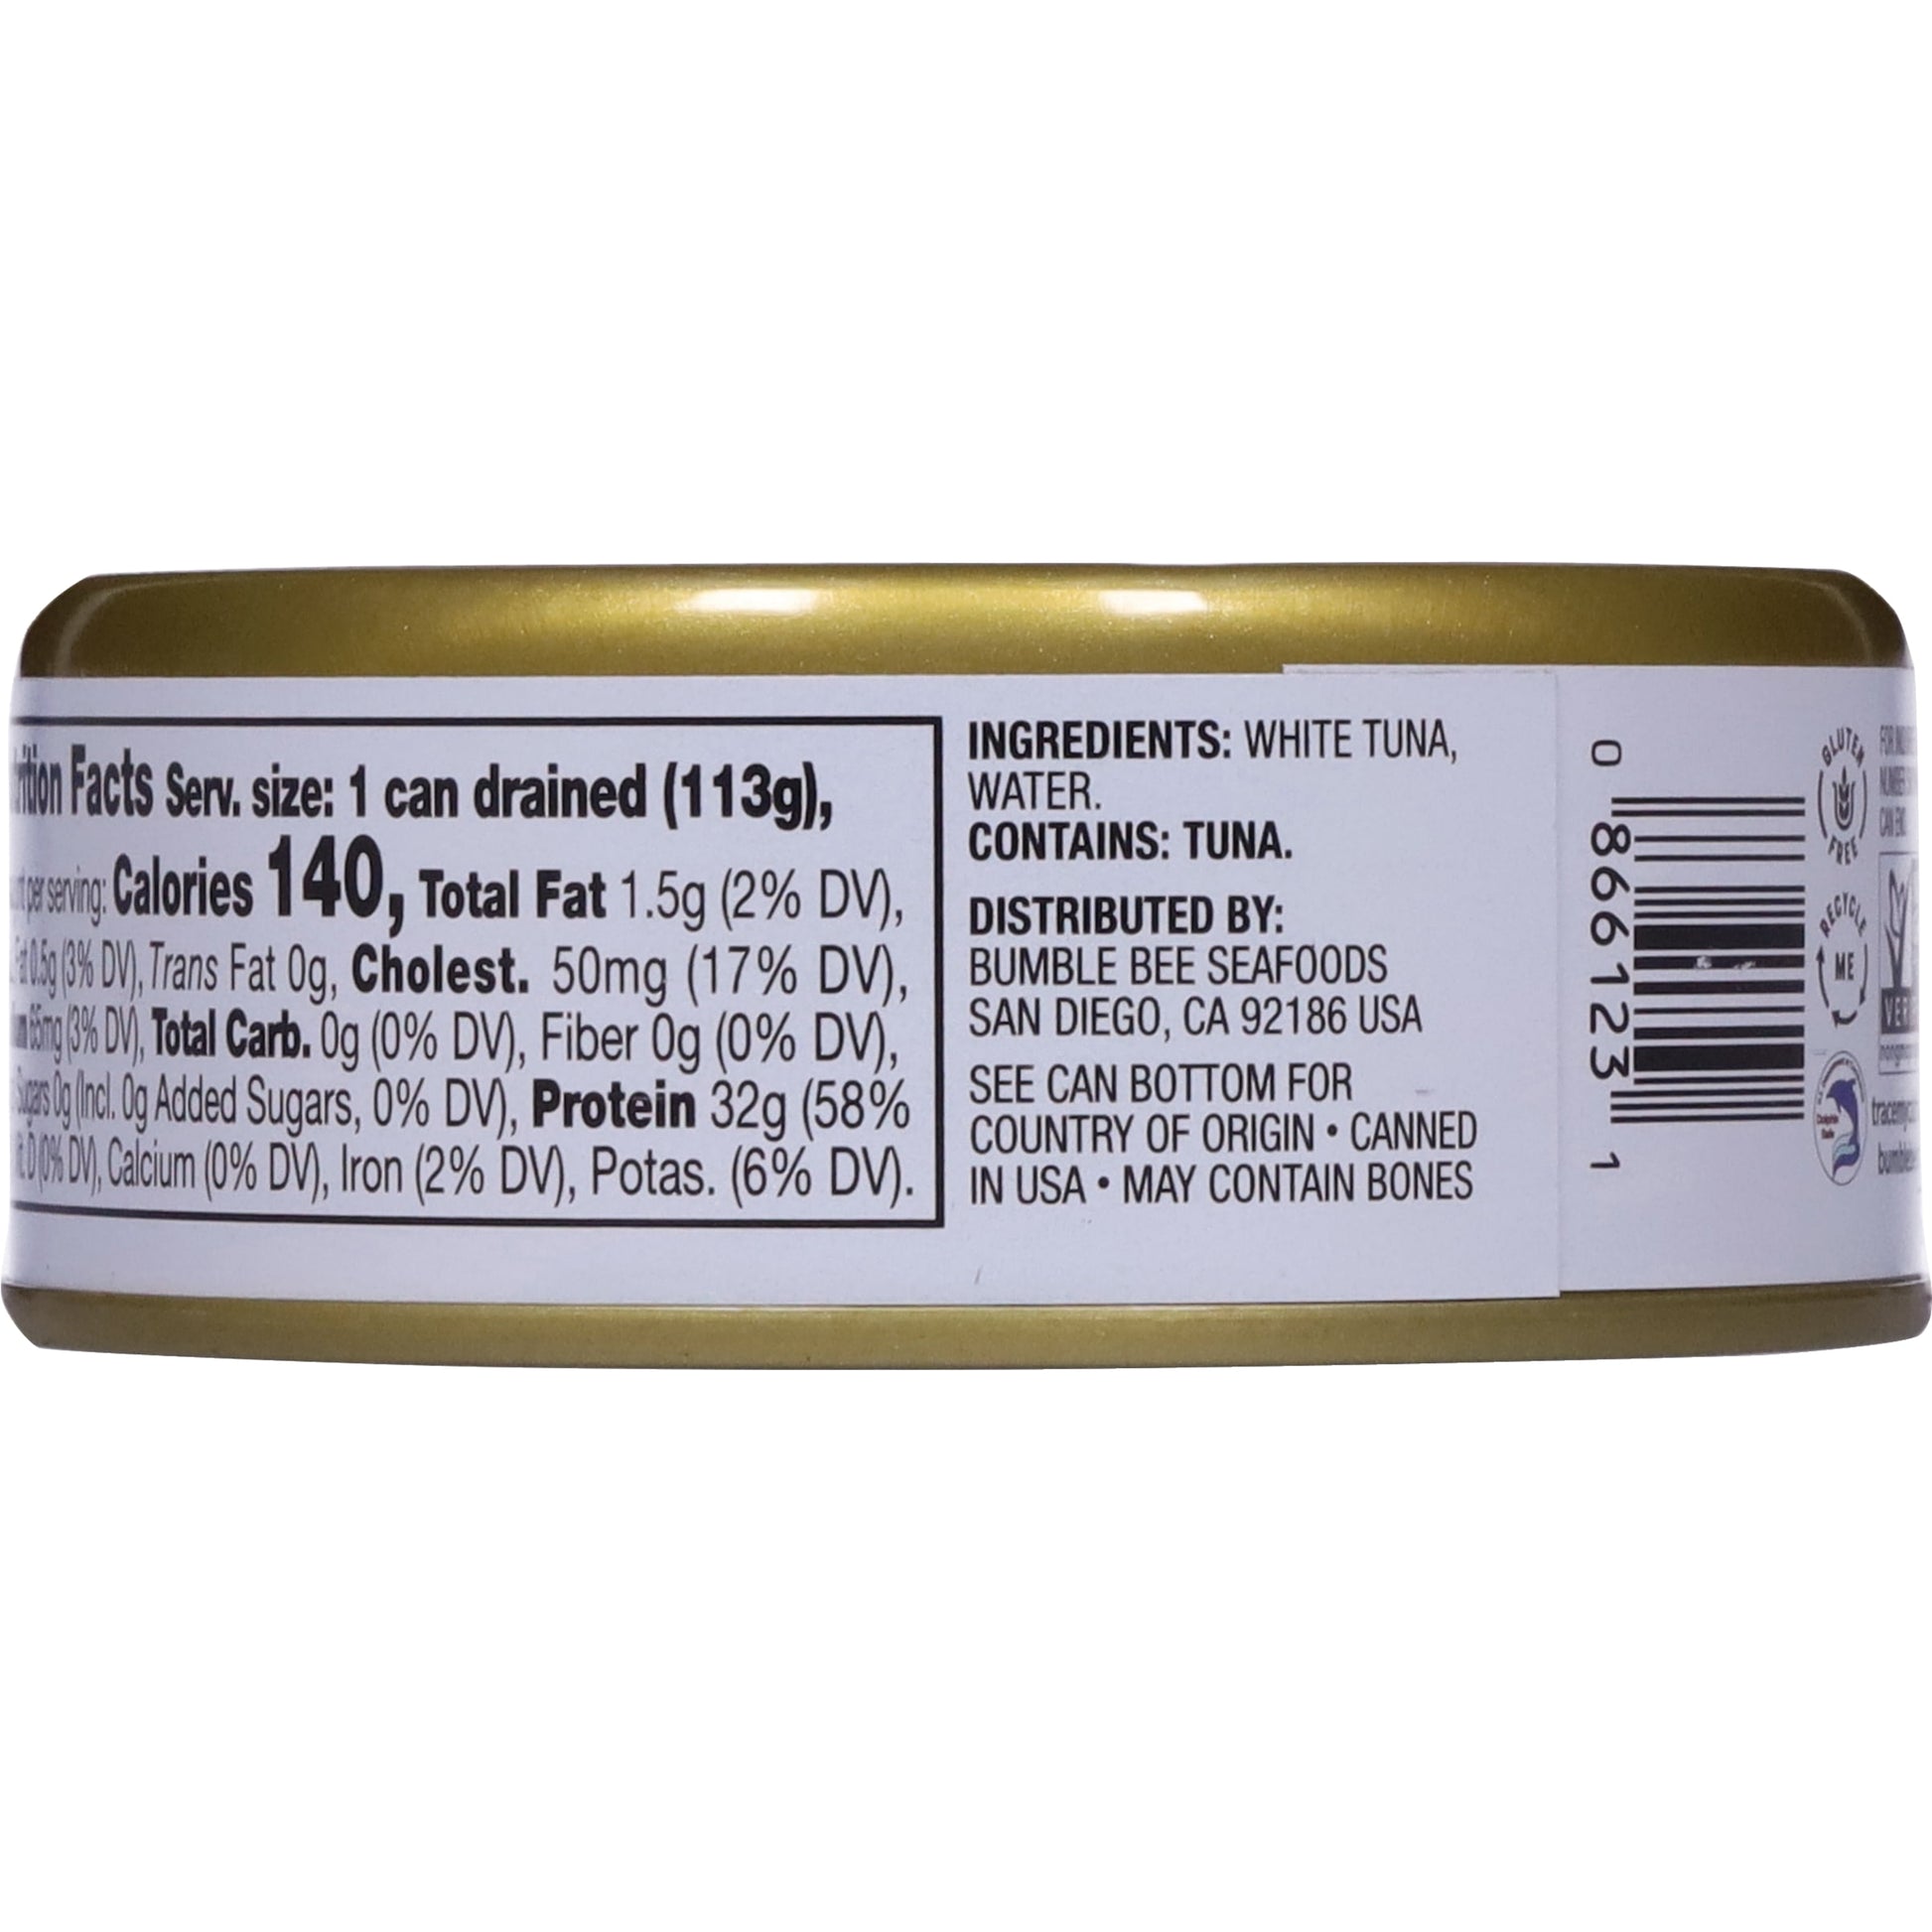 Prime Solid White Albacore Tuna Low Sodium in Water, 5 Oz Can